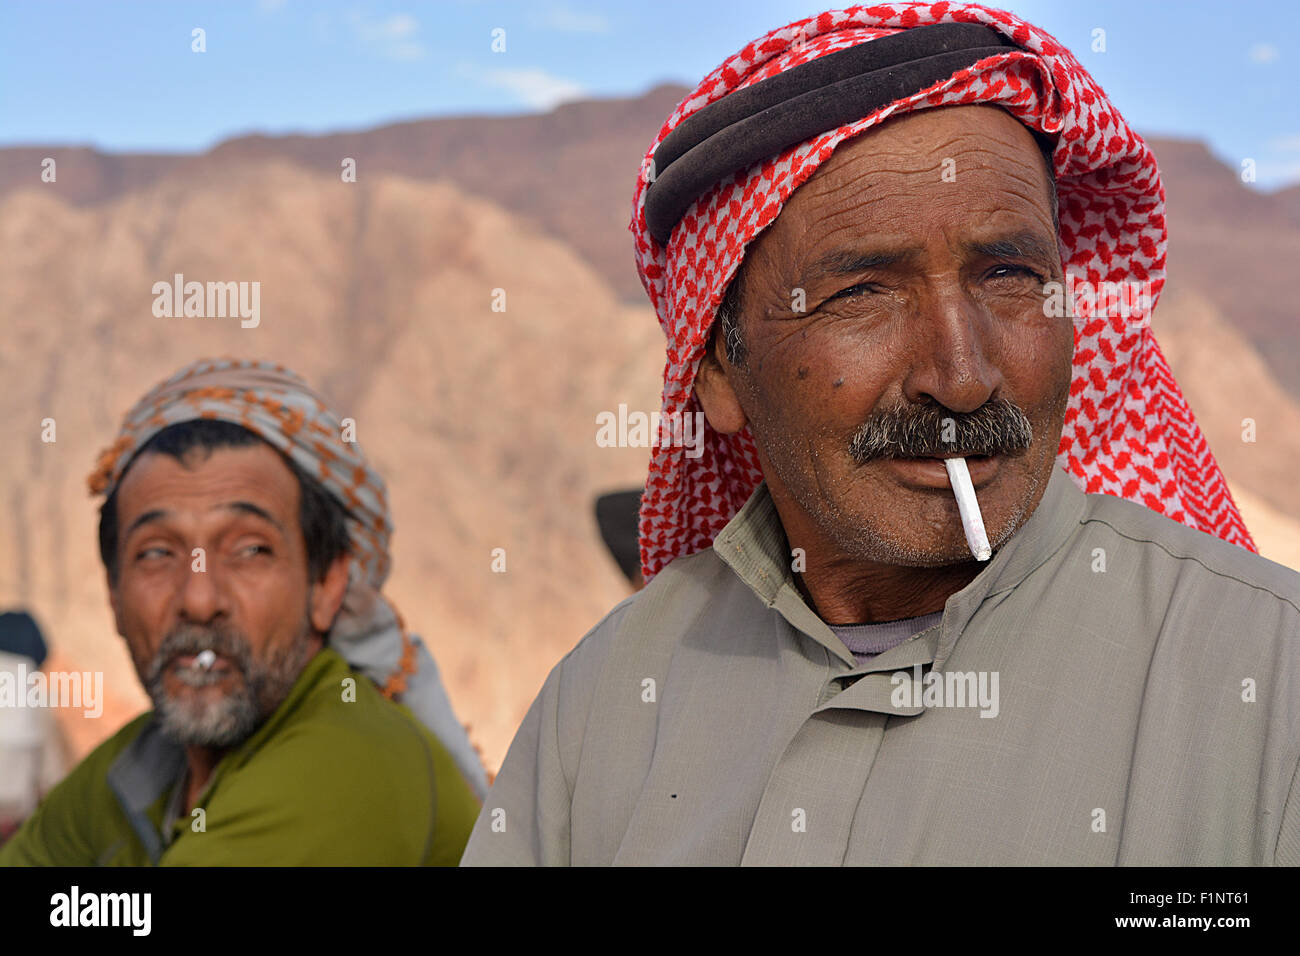 jordan-traditional-bedouin-arab-men-F1NT61.jpg